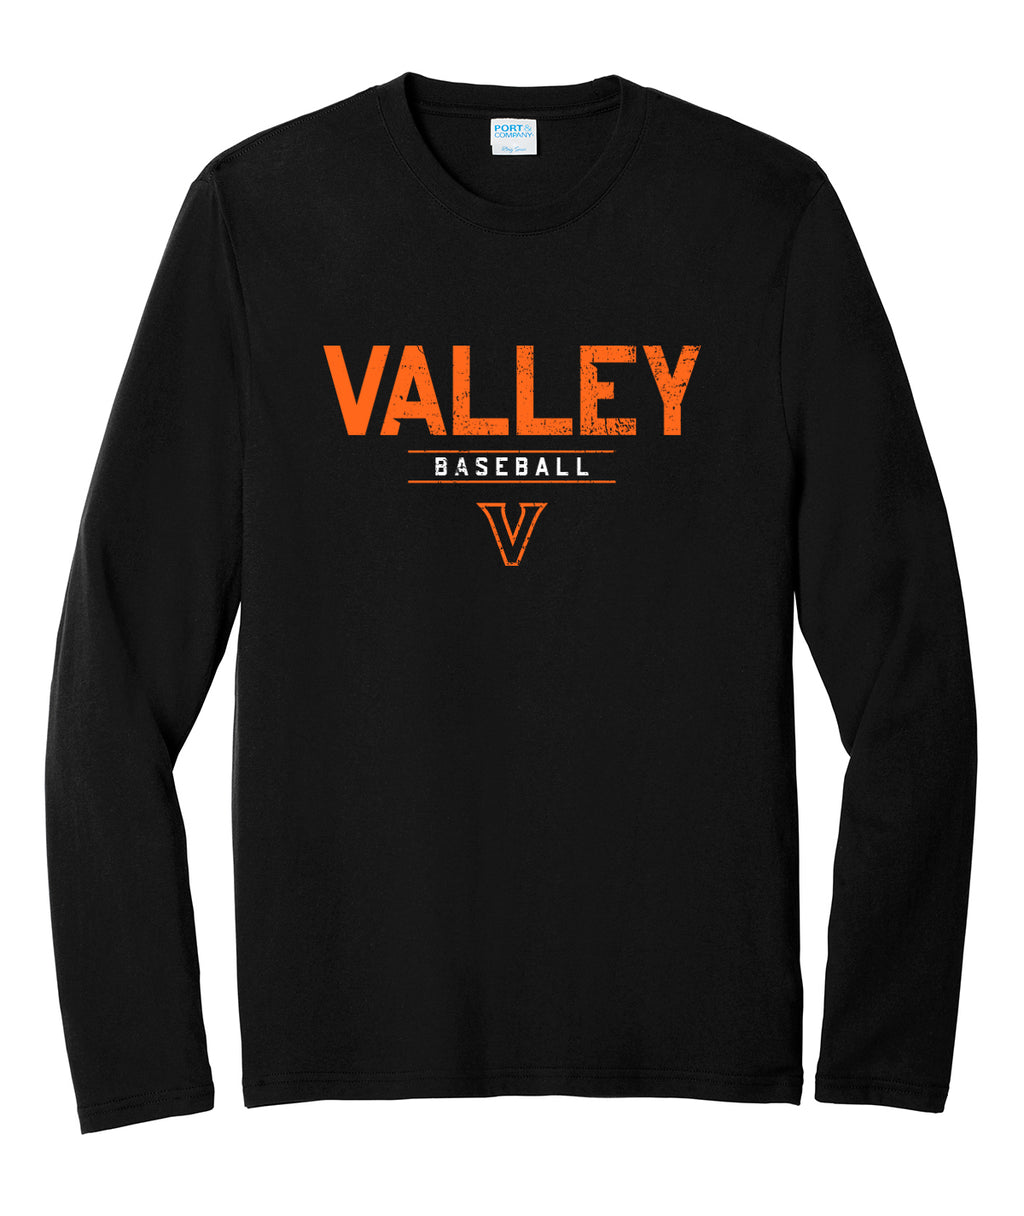 Valley Baseball Long-Sleeve Tee